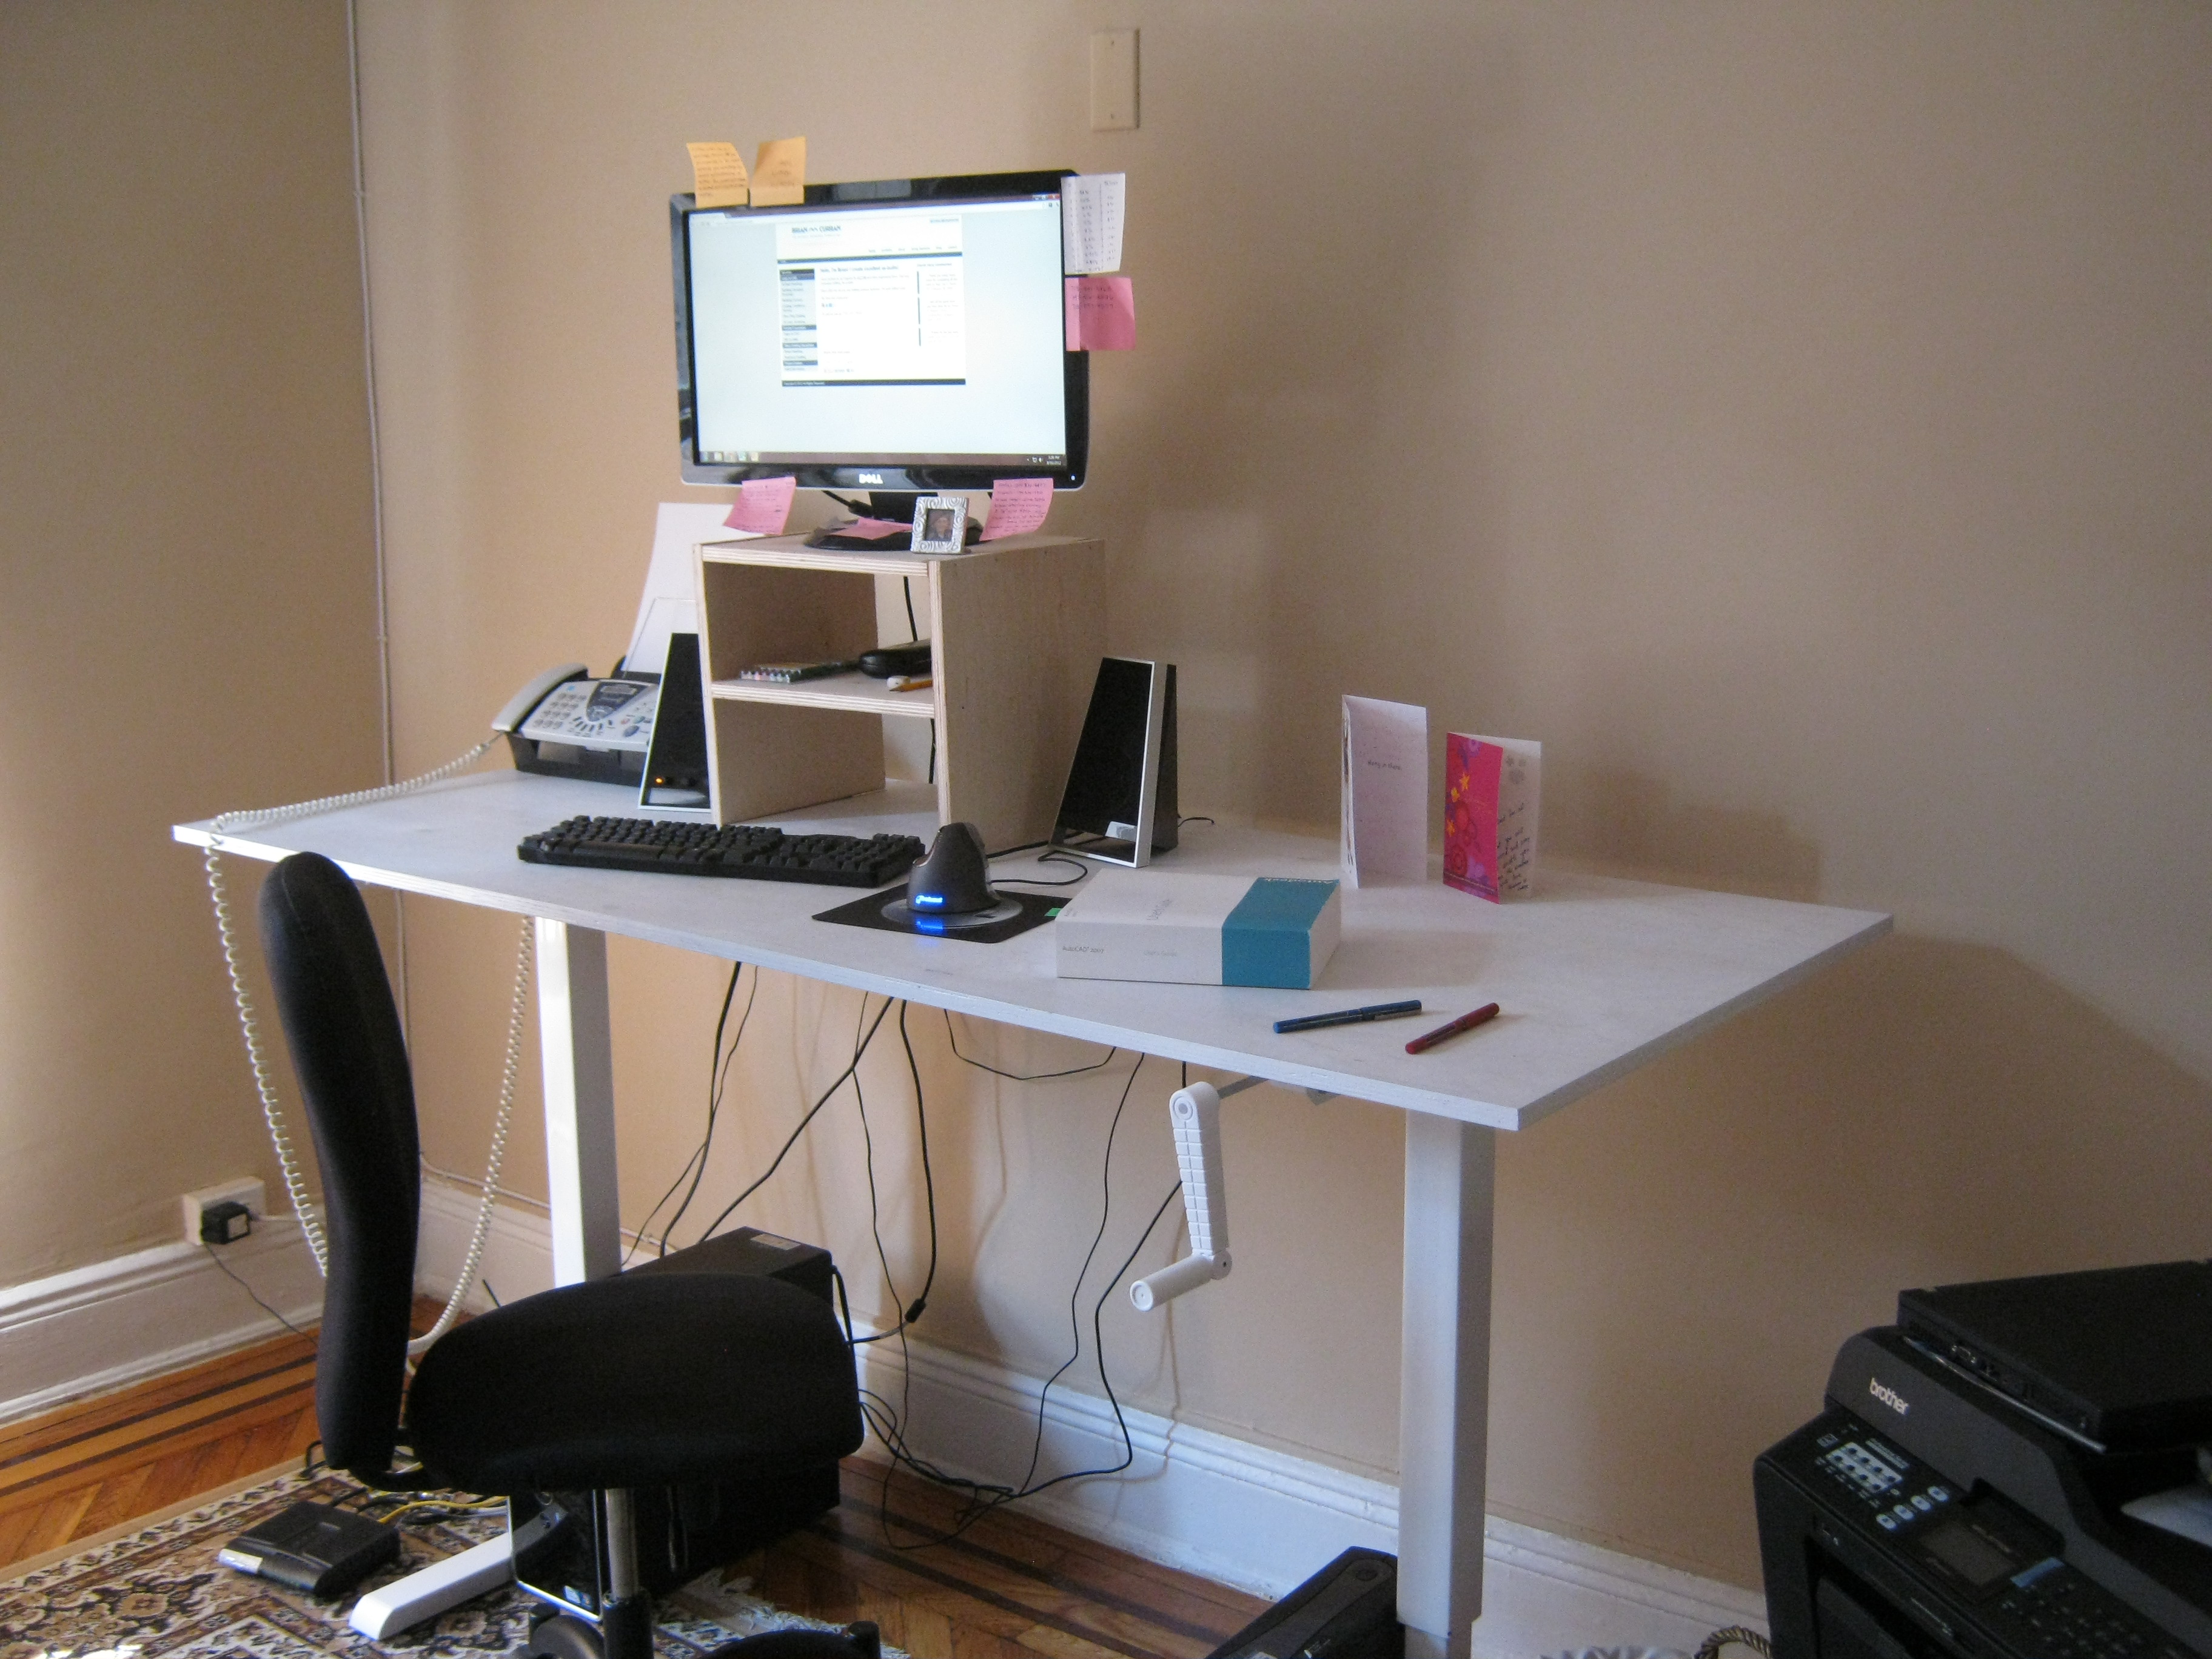 https://www.draftingservices.com/blog/wp-content/uploads/2012/09/standing-desk-1.jpg